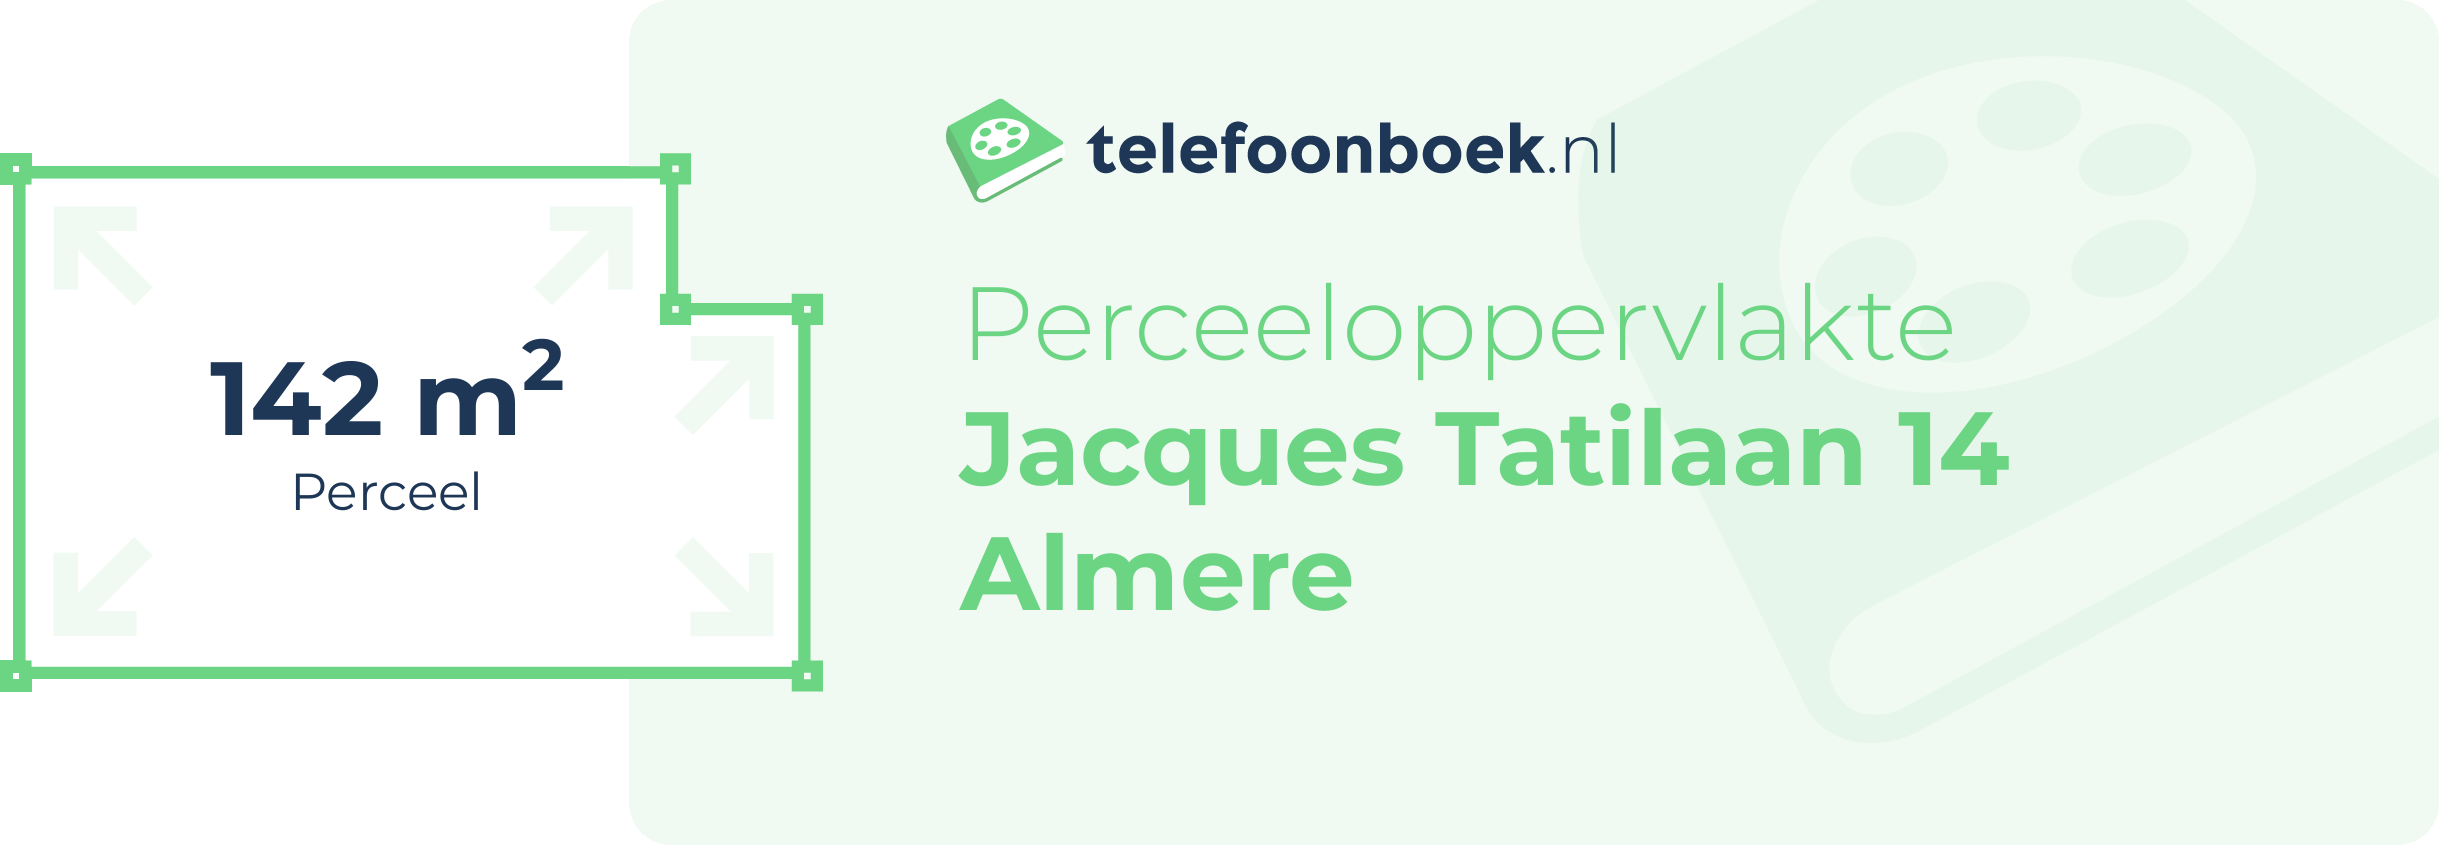 Perceeloppervlakte Jacques Tatilaan 14 Almere